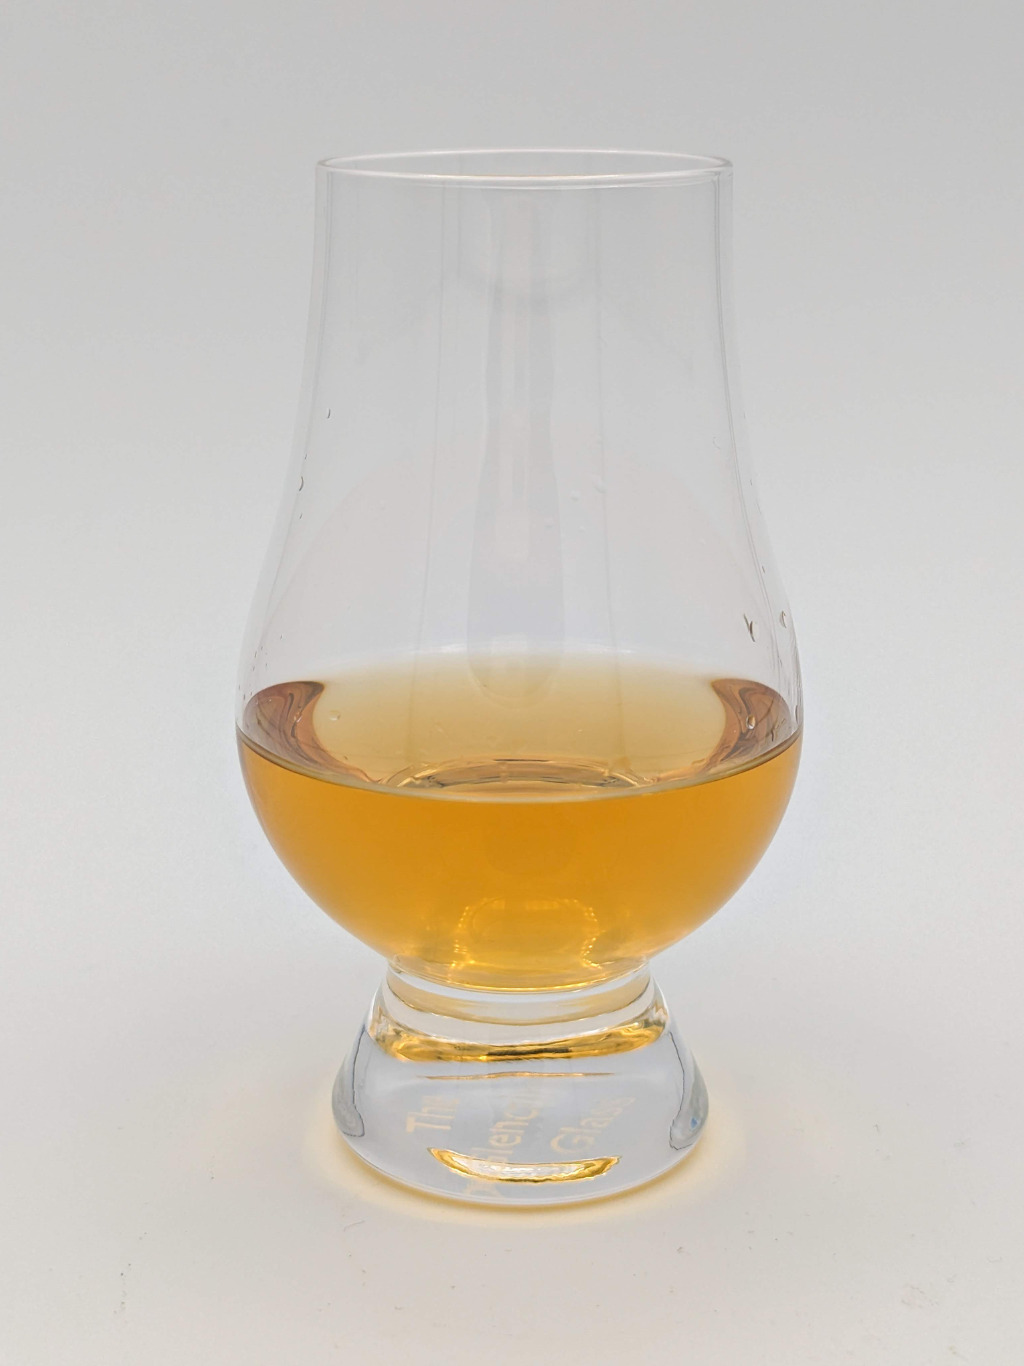 Gold Liquid in a Glencairn glass